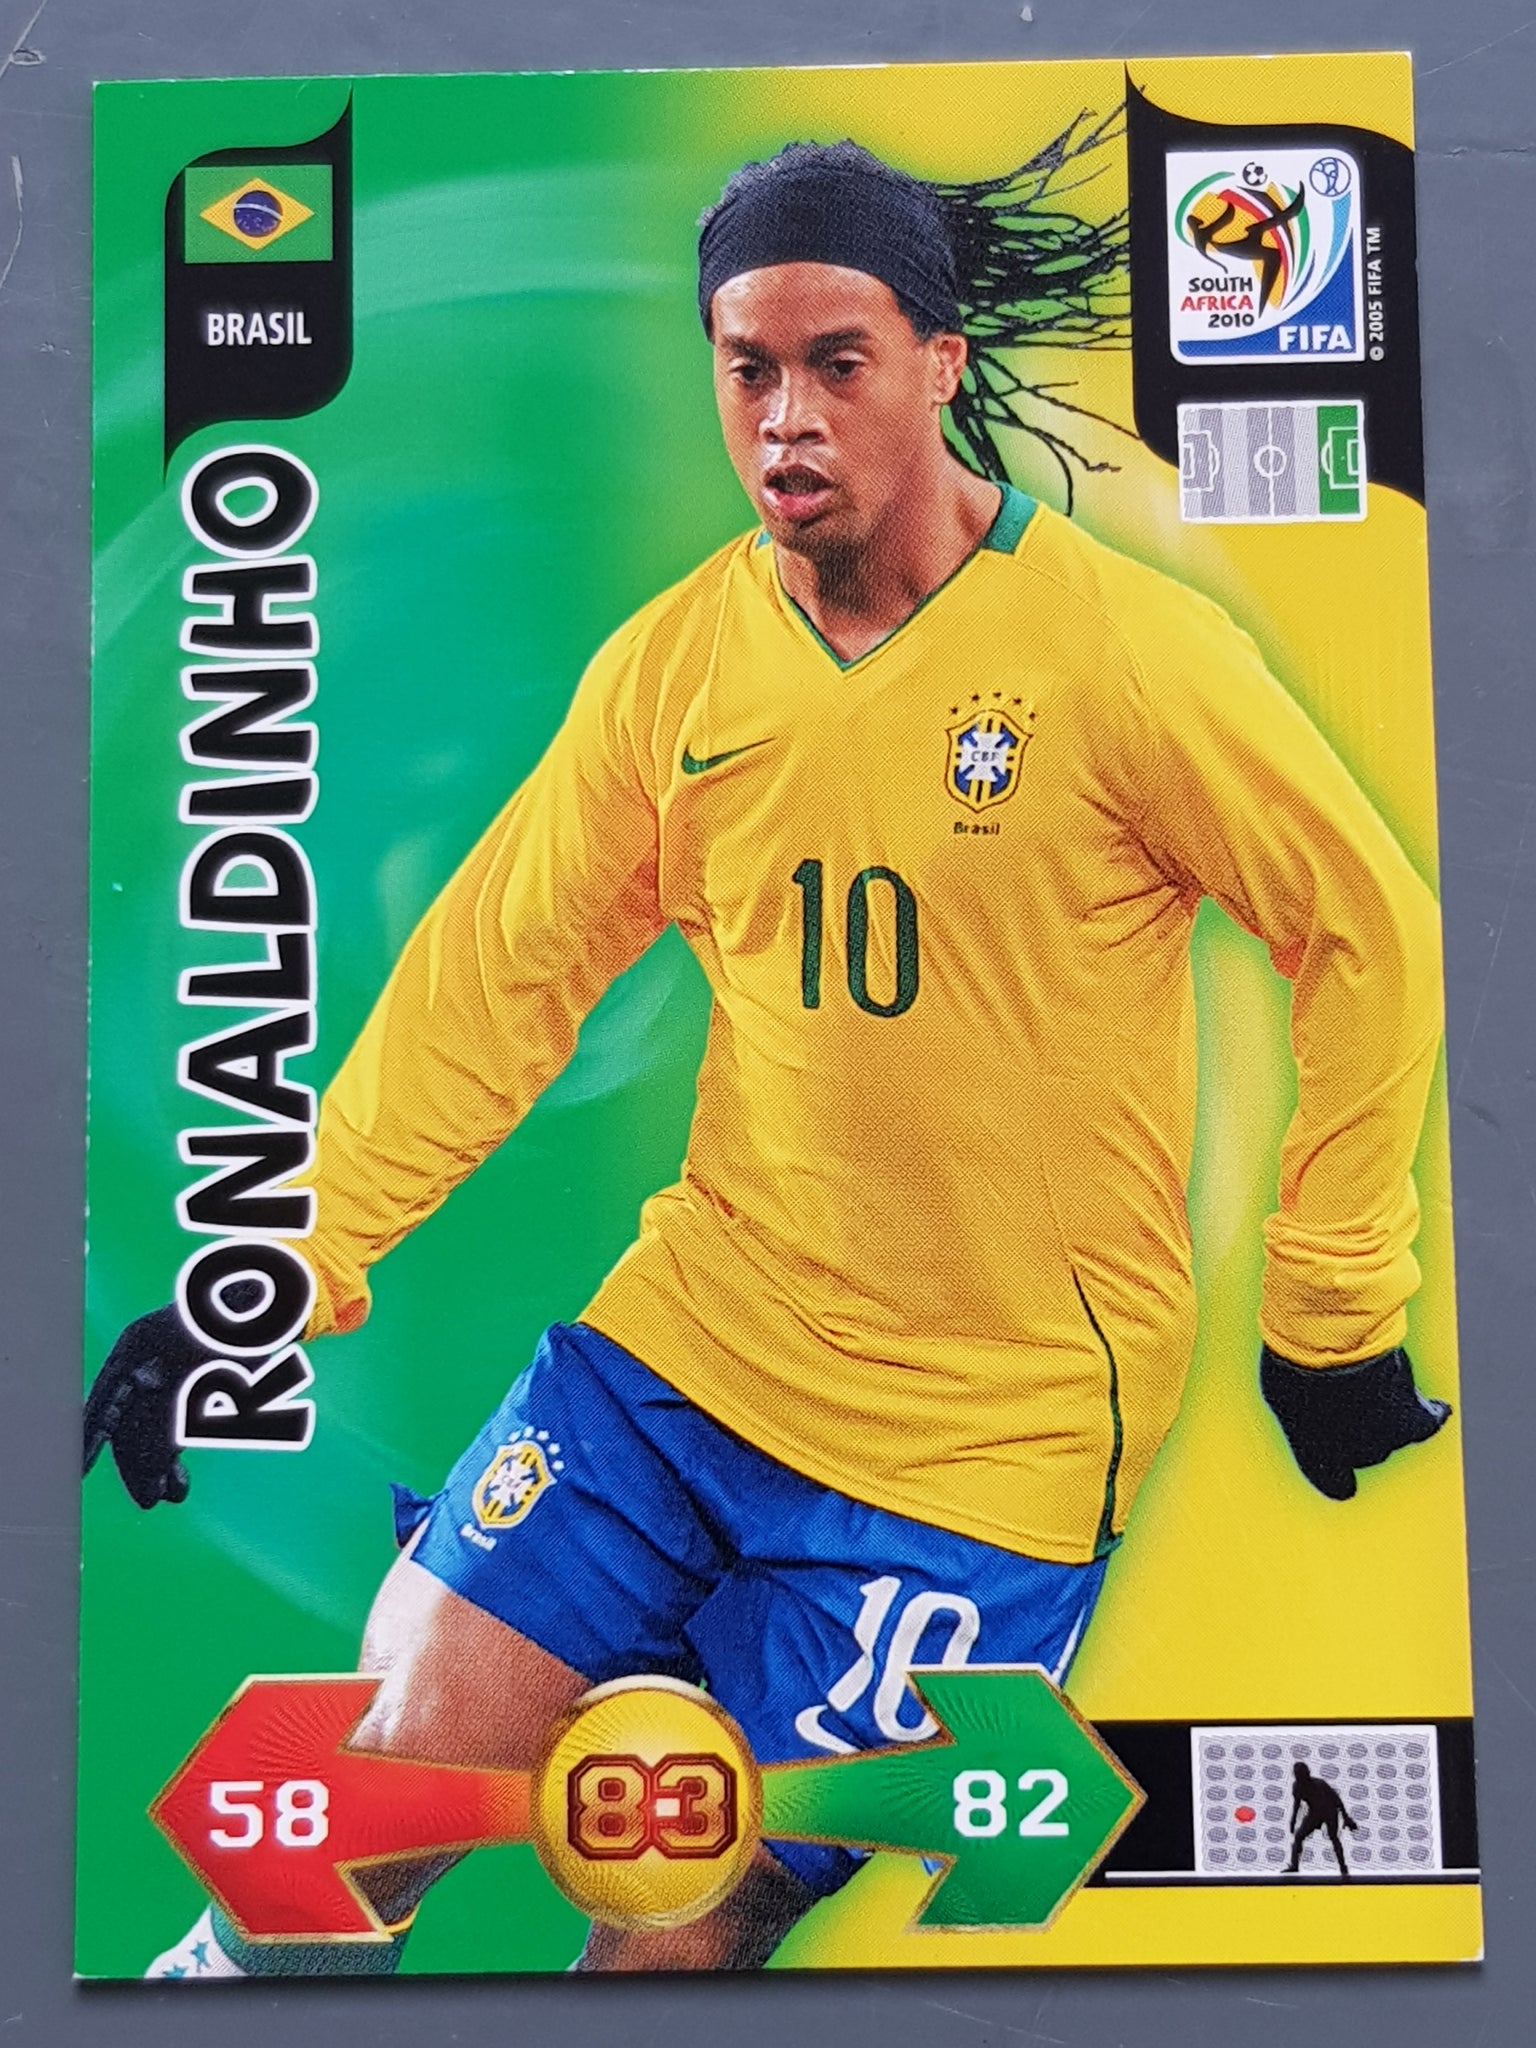 2010 Panini Adrenalyn FIFA World Cup South Africa Ronaldinho Trading Card